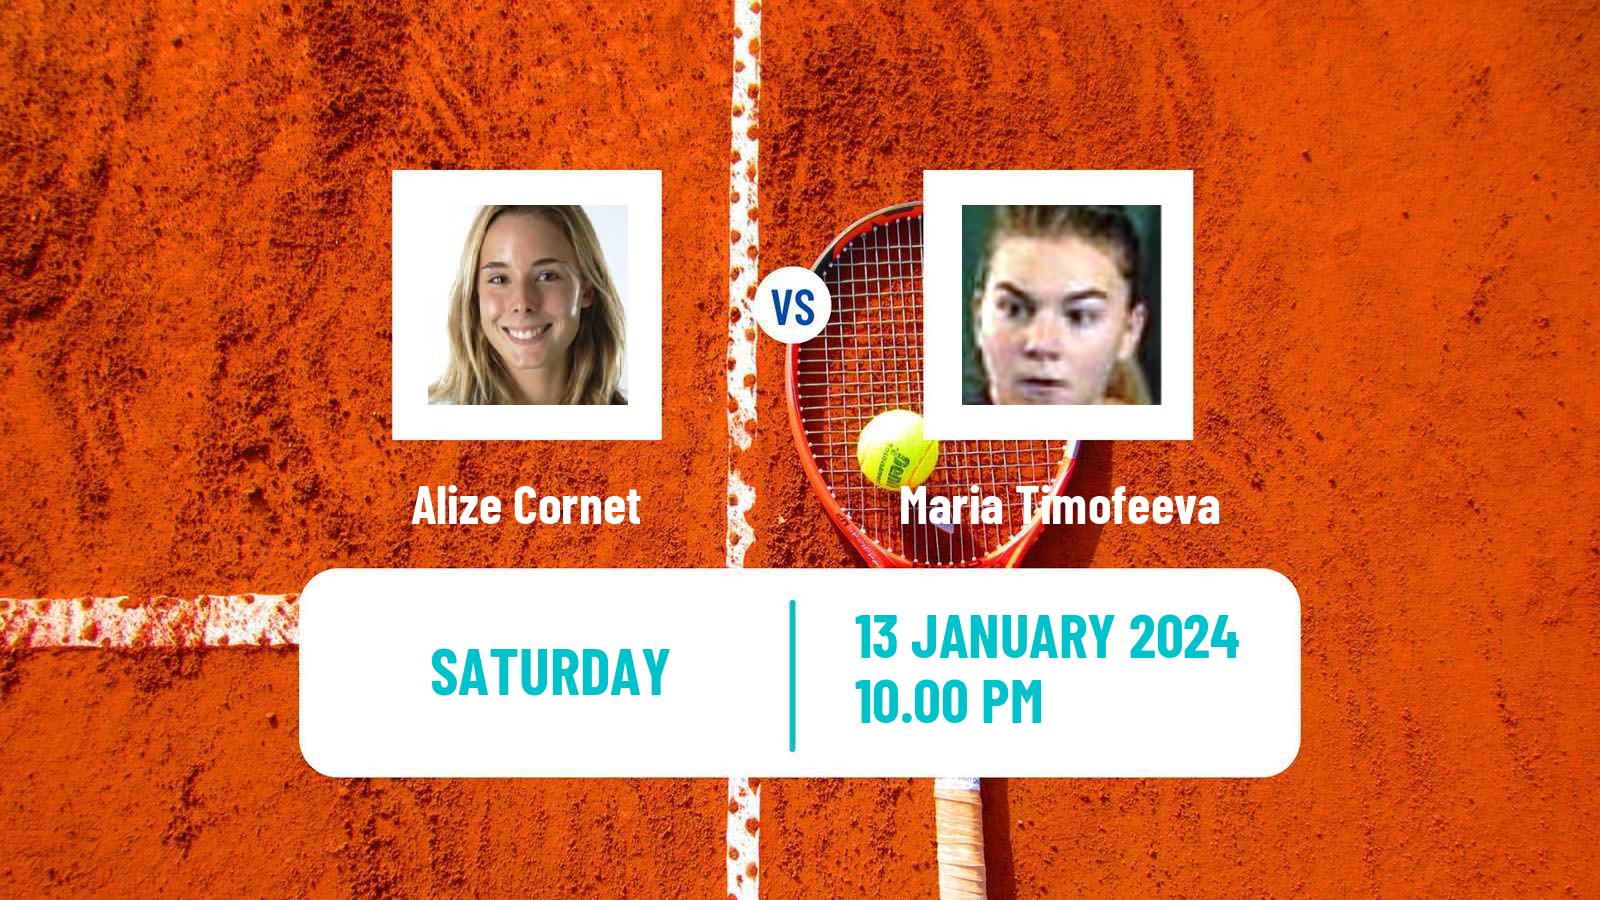 Tennis WTA Australian Open Alize Cornet - Maria Timofeeva